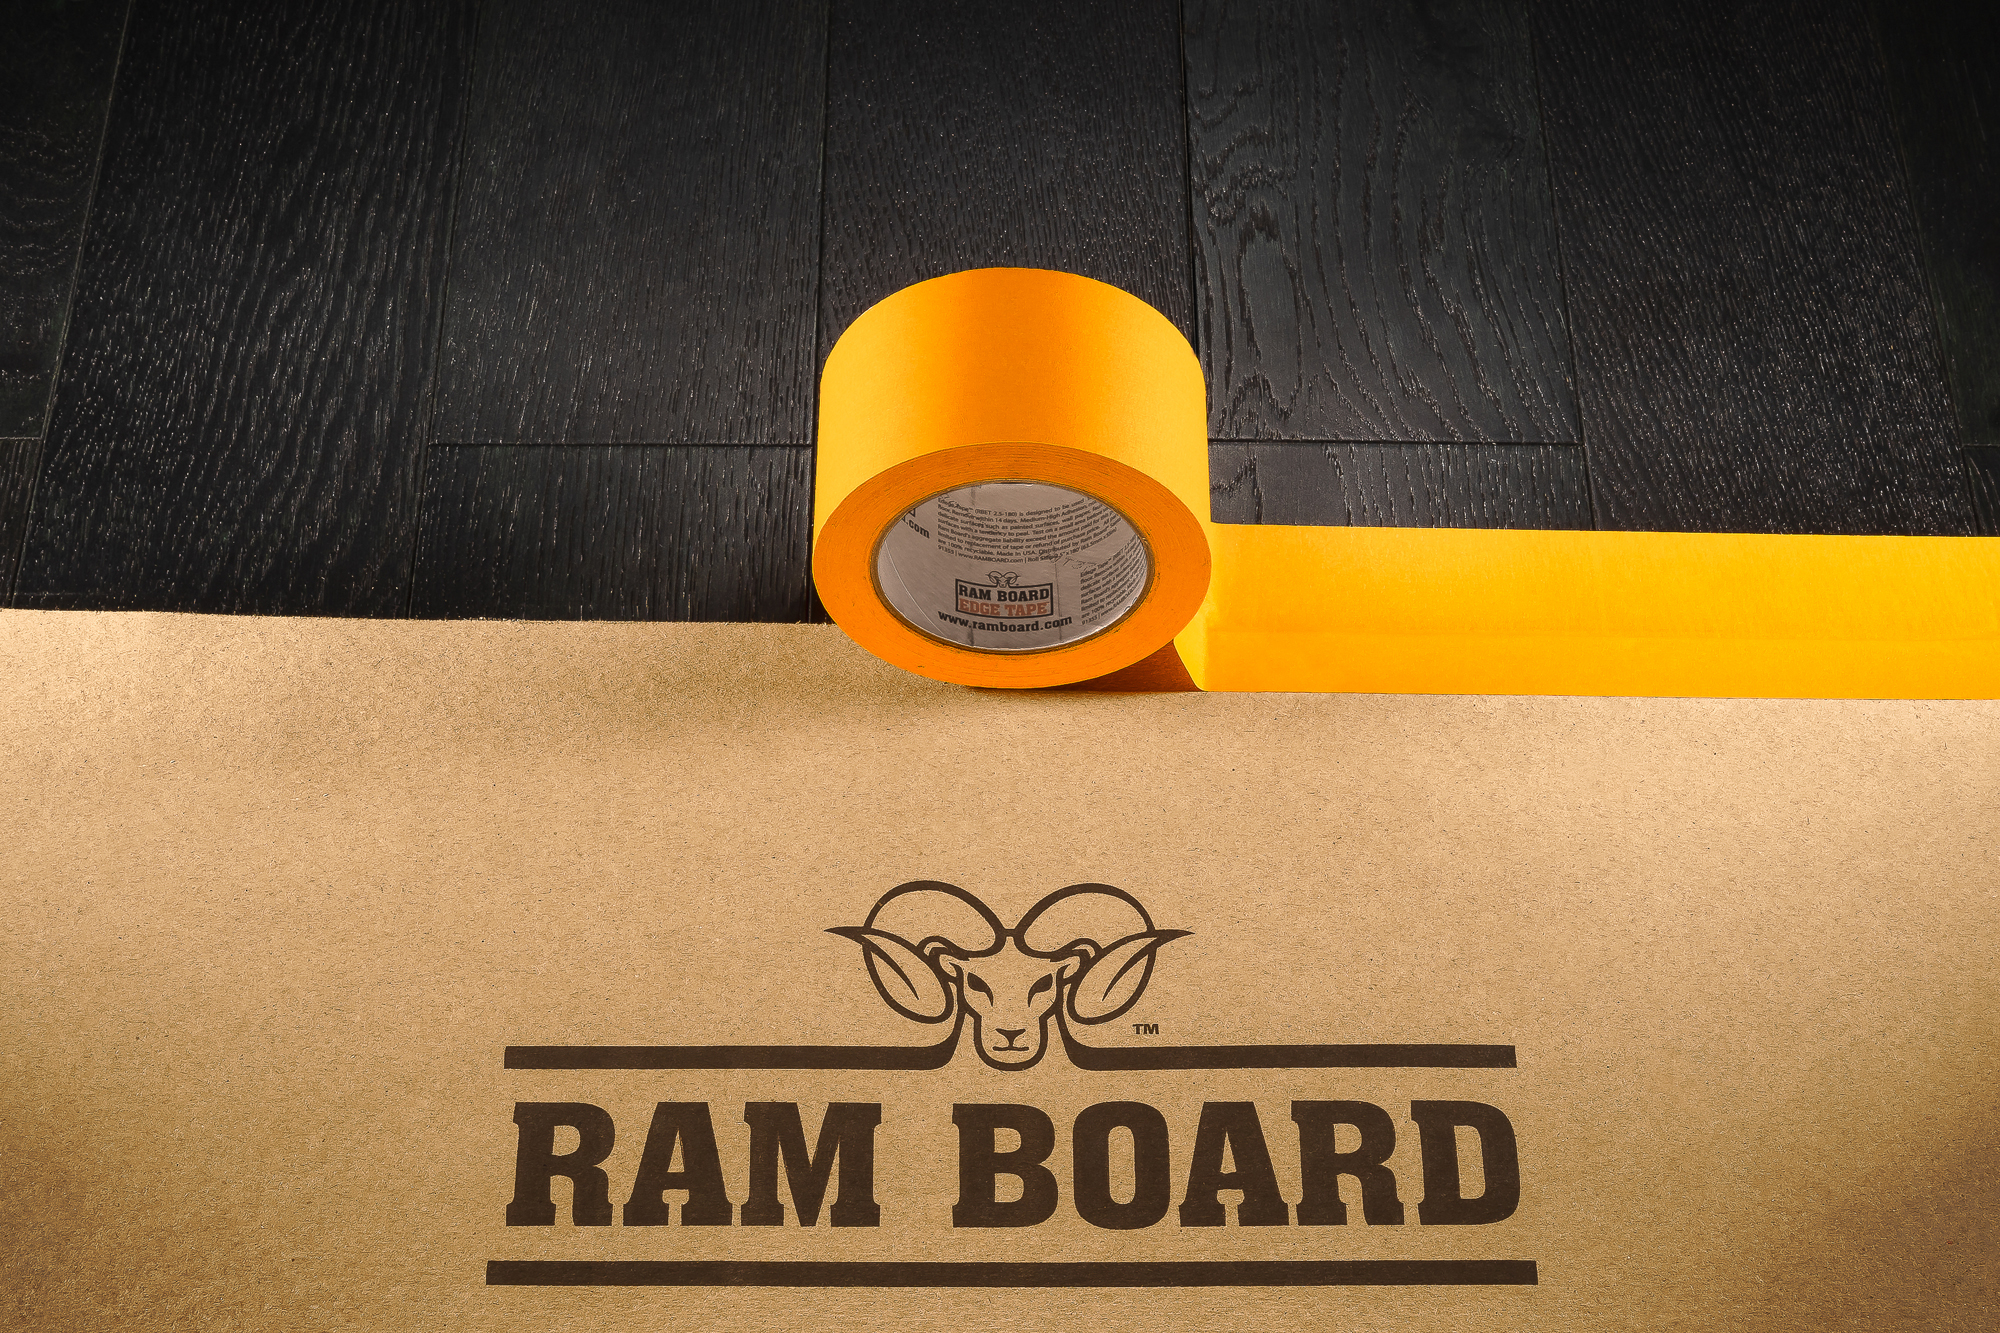 Ram board edge tape